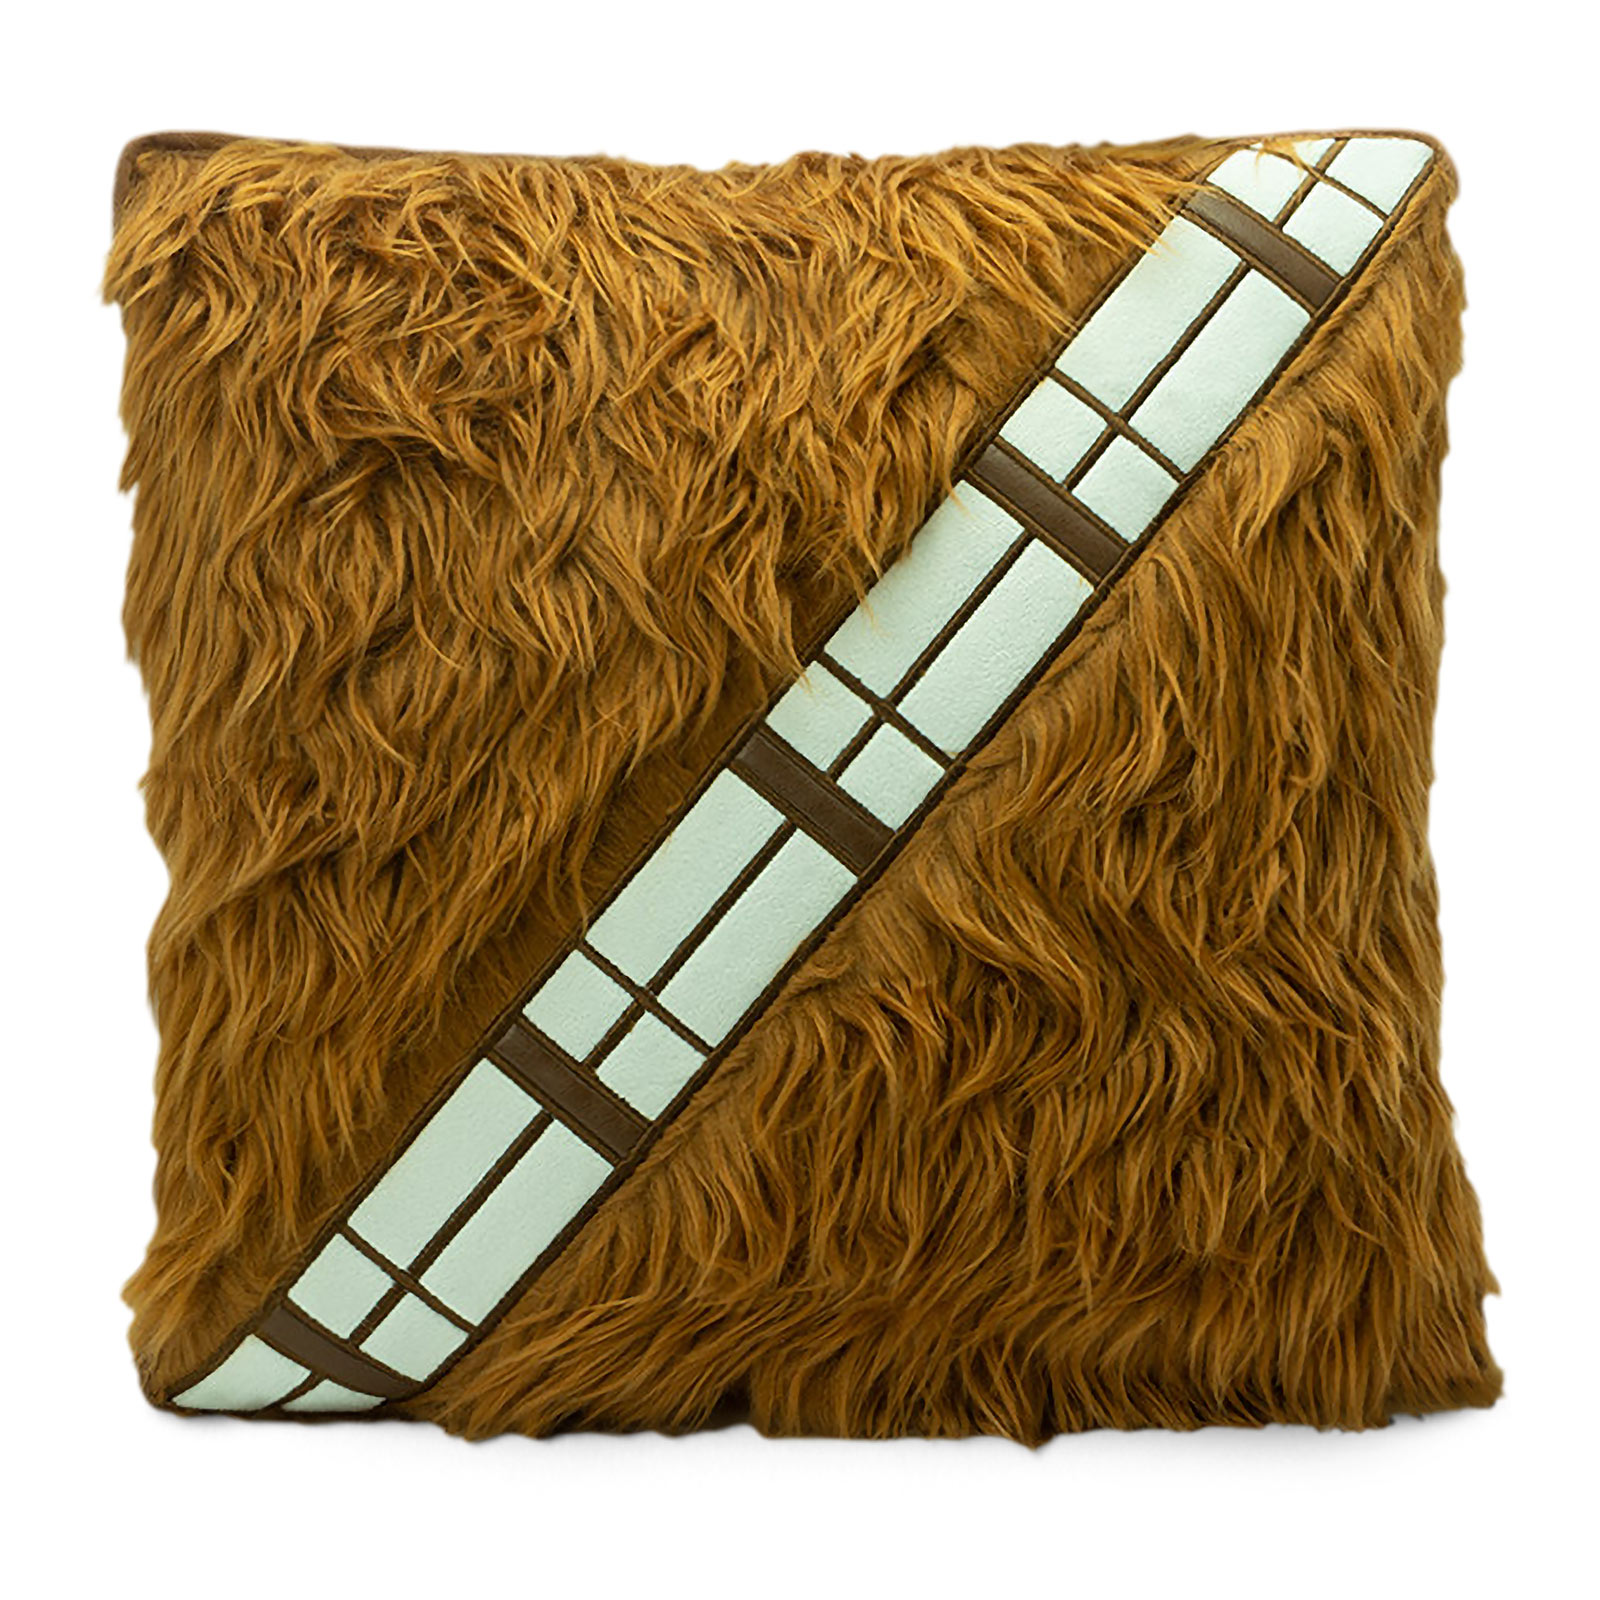 Star Wars - Chewbacca cartridge belt cushion